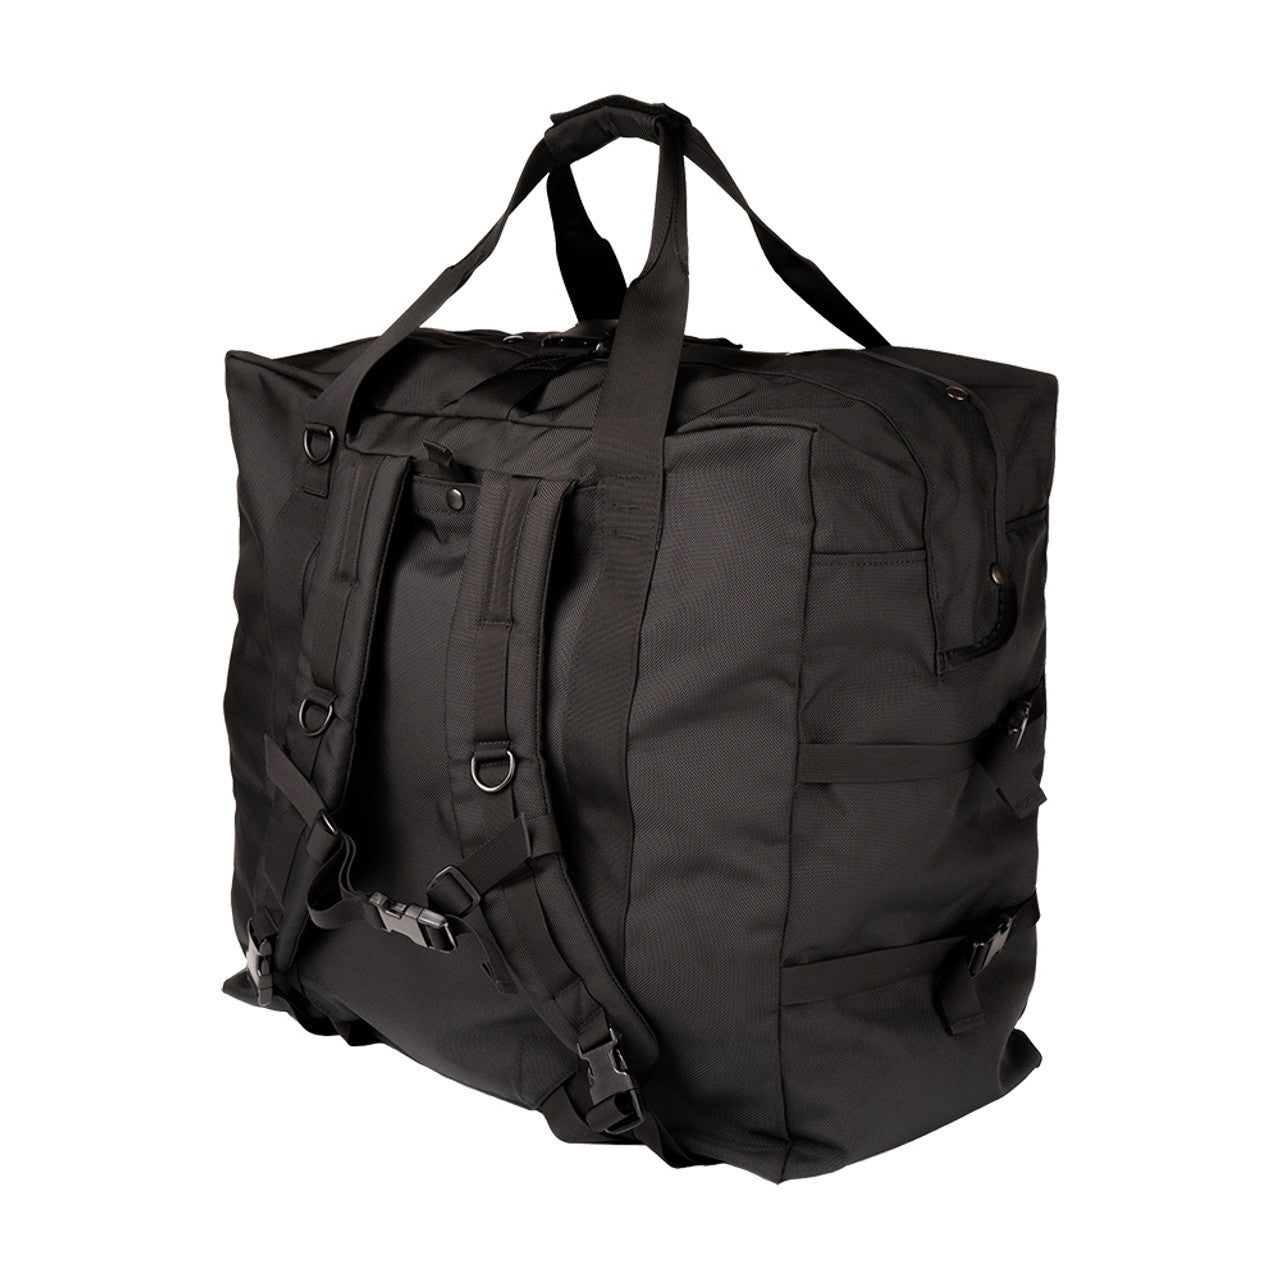 Modified F Aviator Kit Bag - Black : Back